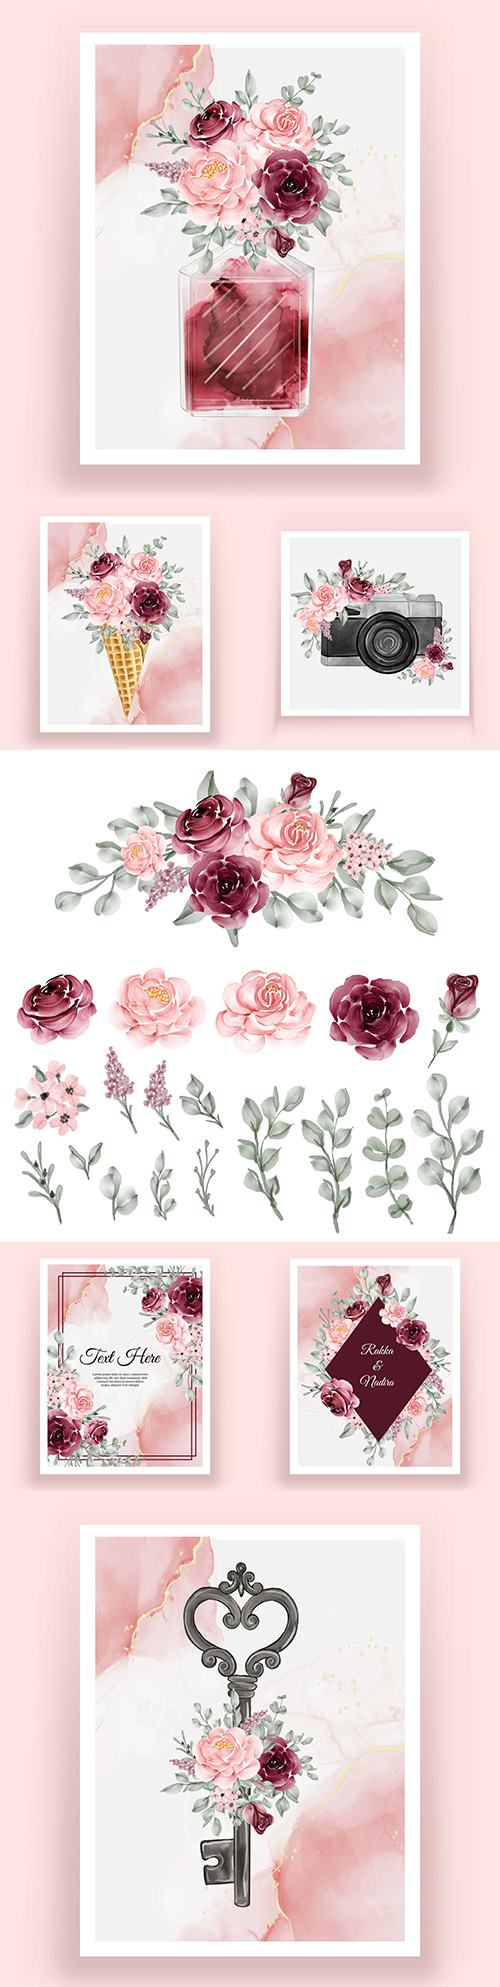 Watercolor elegant rose decorative flowers for invitational design